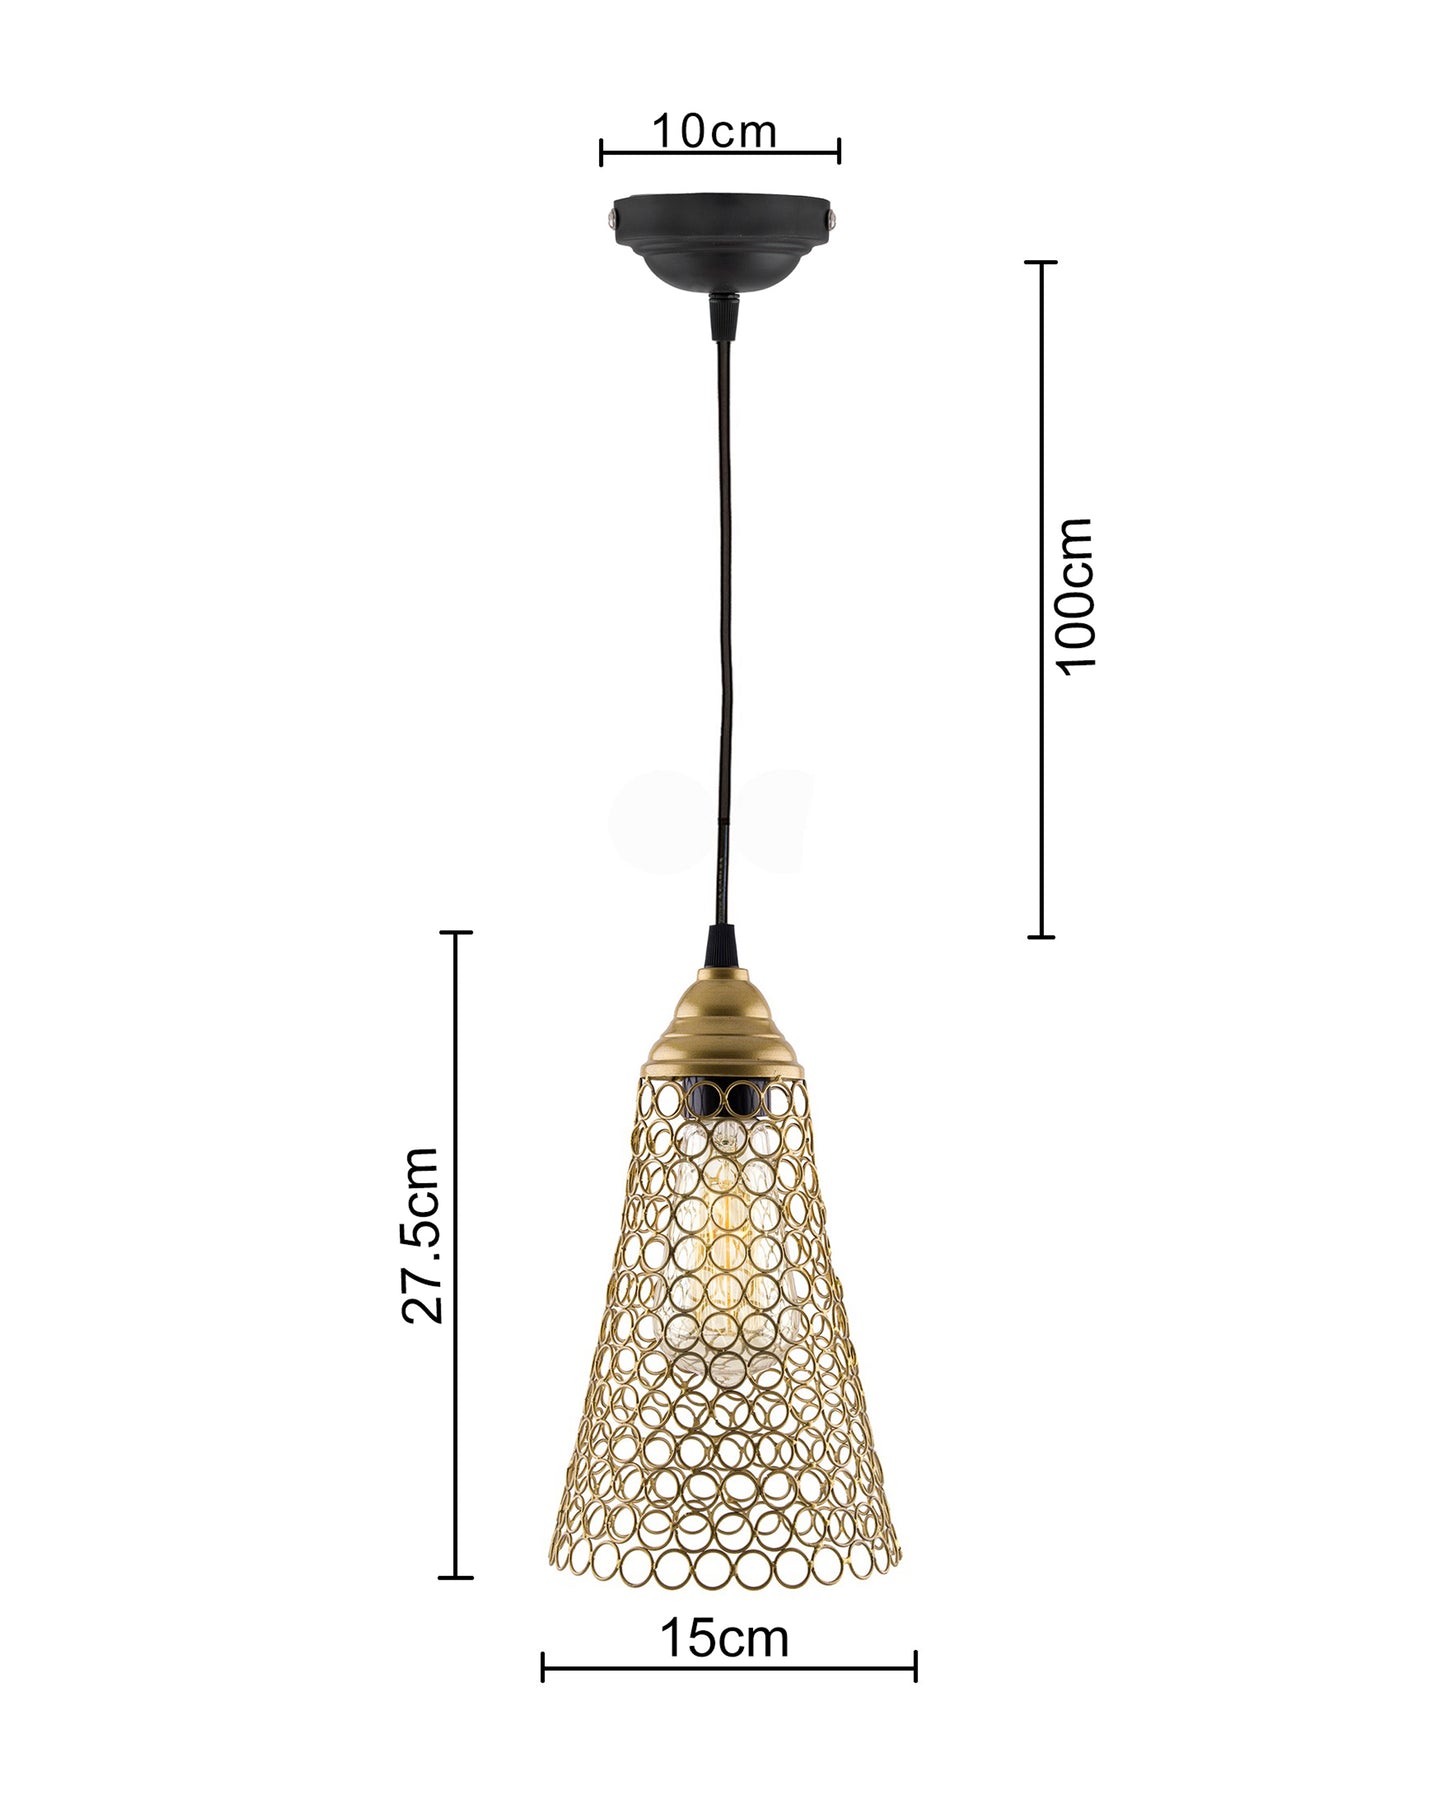 Hanging Golden Steel Cone light, hanging light and fixture